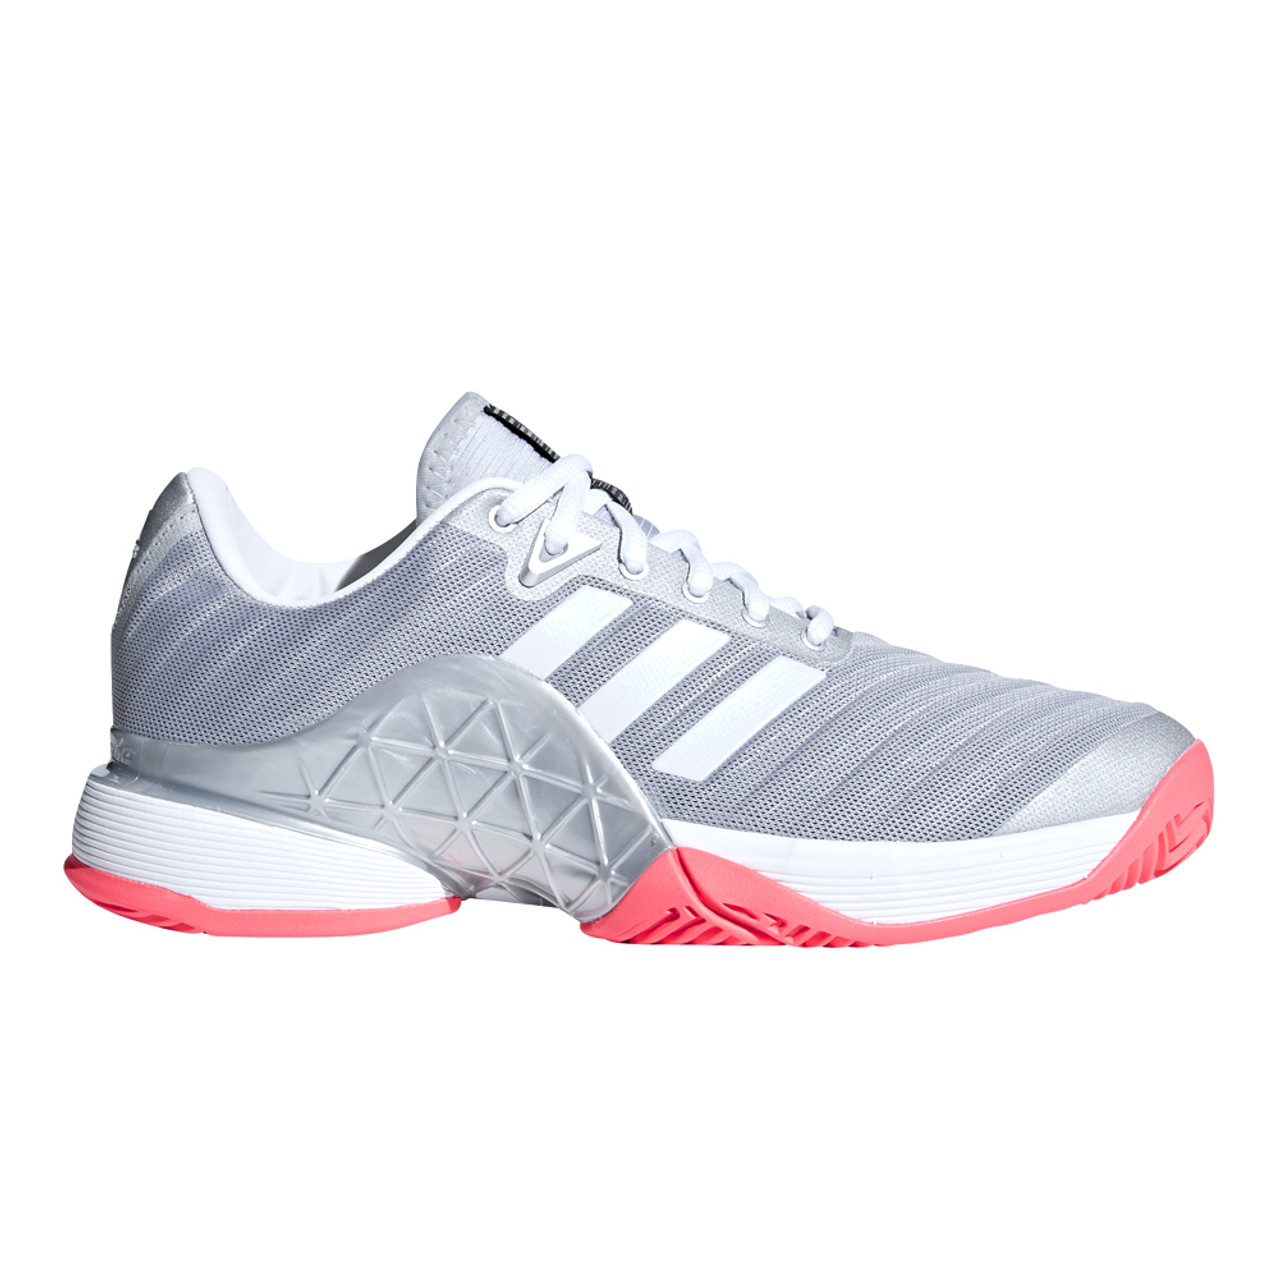 Adidas Women's Barricade 2018 Tennis - Silver Discount Adidas Ladies Athletic Shoe & More - | Shoolu.com